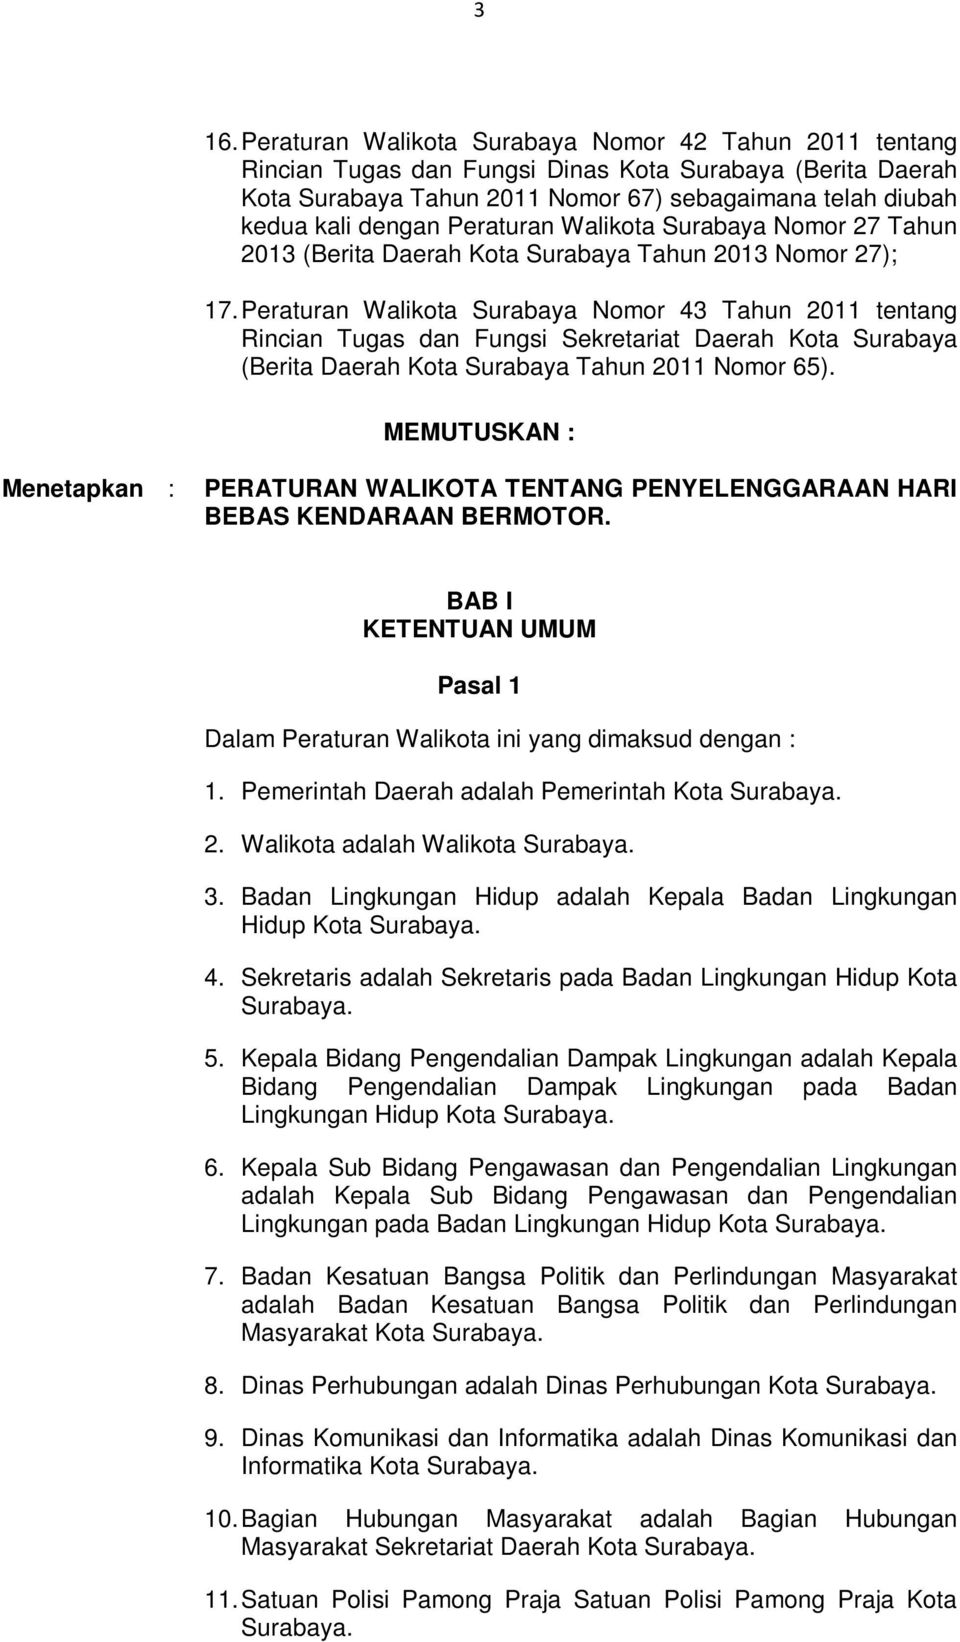 Peraturan Walikota Surabaya Nomor 43 Tahun 2011 tentang Rincian Tugas dan Fungsi Sekretariat Daerah Kota Surabaya (Berita Daerah Kota Surabaya Tahun 2011 Nomor 65).